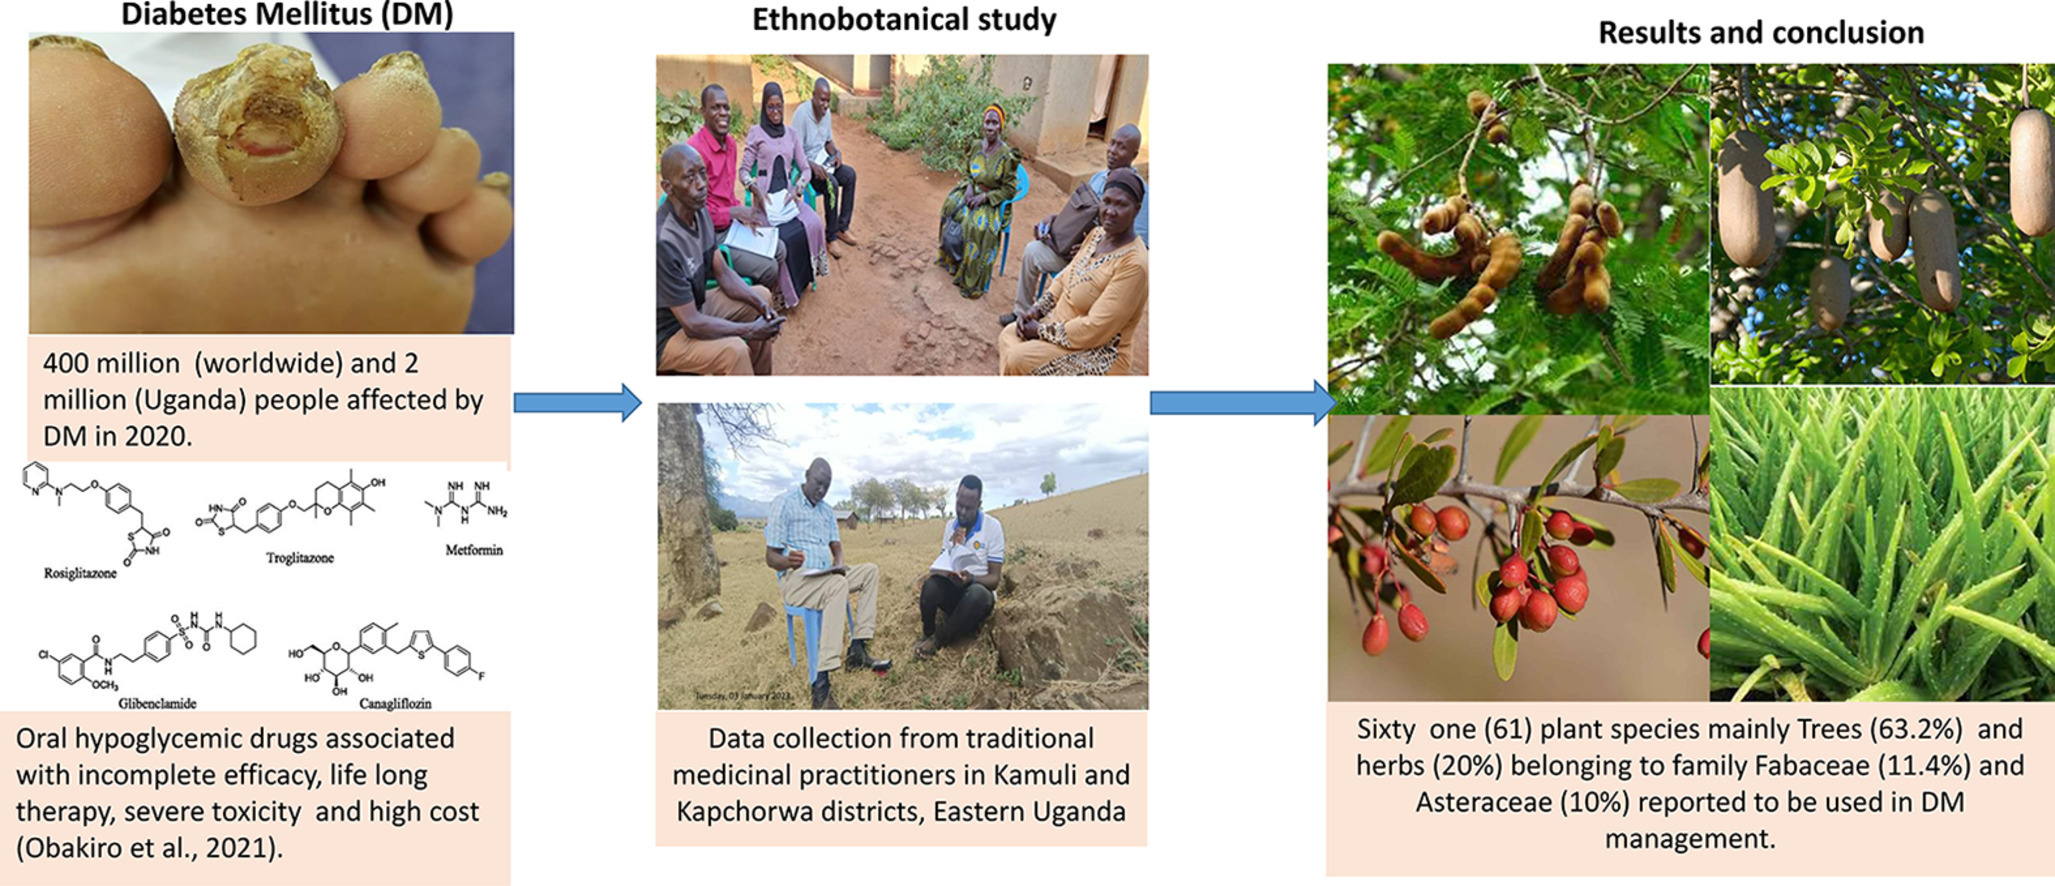 Ethnobotanical study of plants used in management of diabetes mellitus in Eastern Uganda